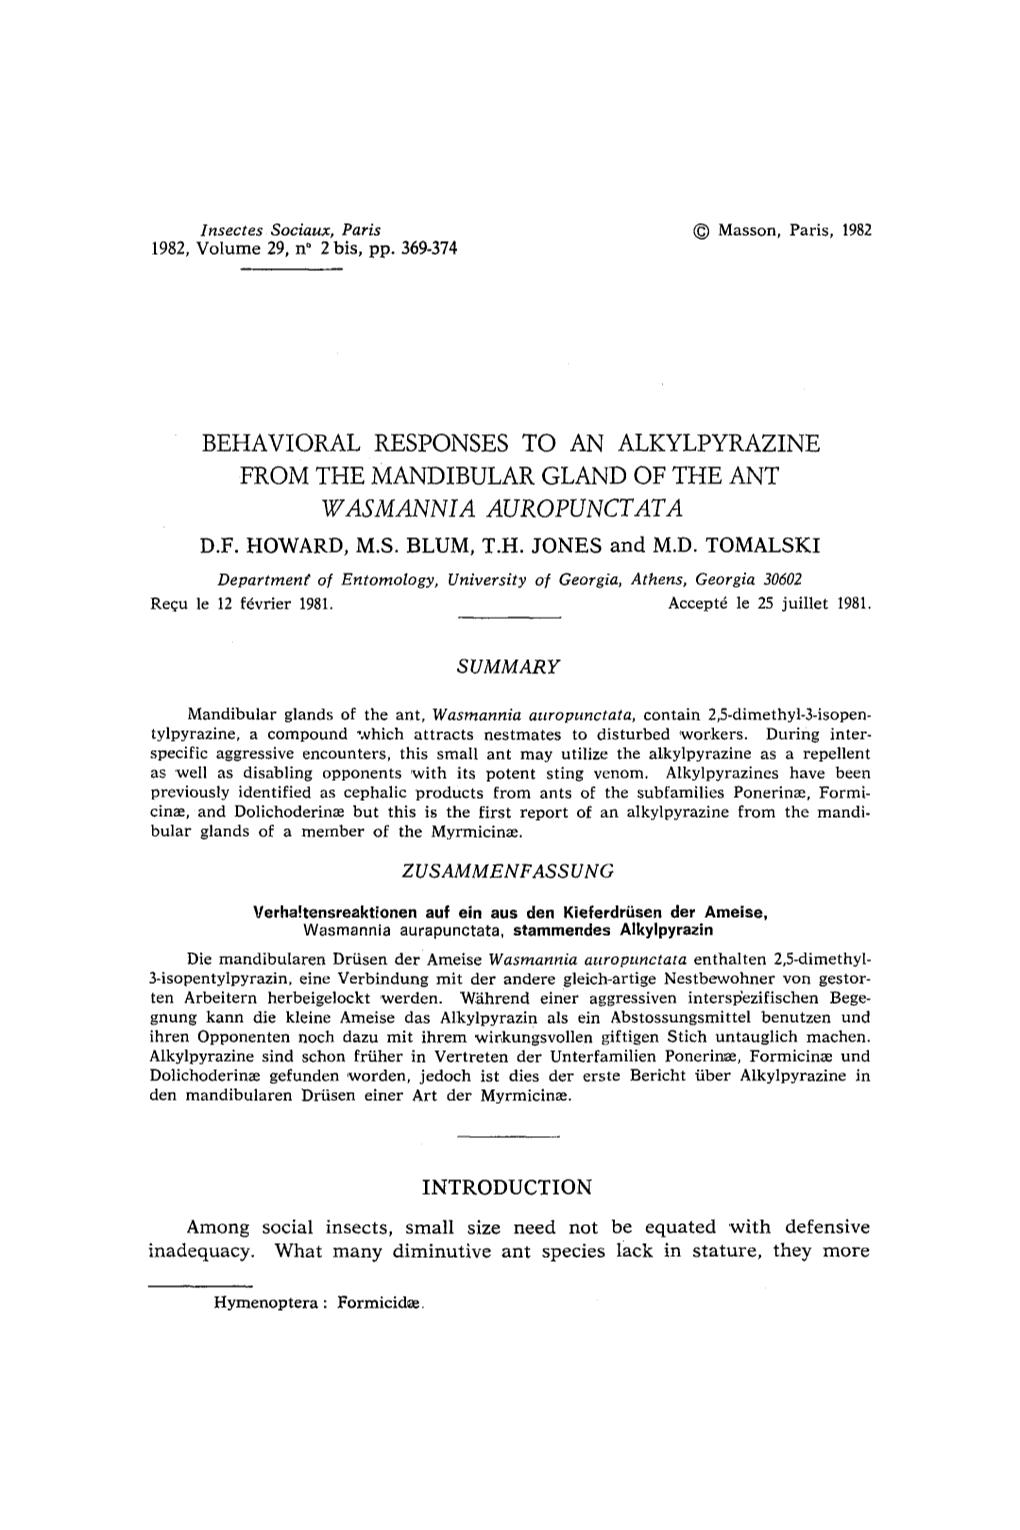 Behavioral Responses to an Alkylpyrazine from the Mandibular Gland of the Ant Wasmannia Auropunctata D.F